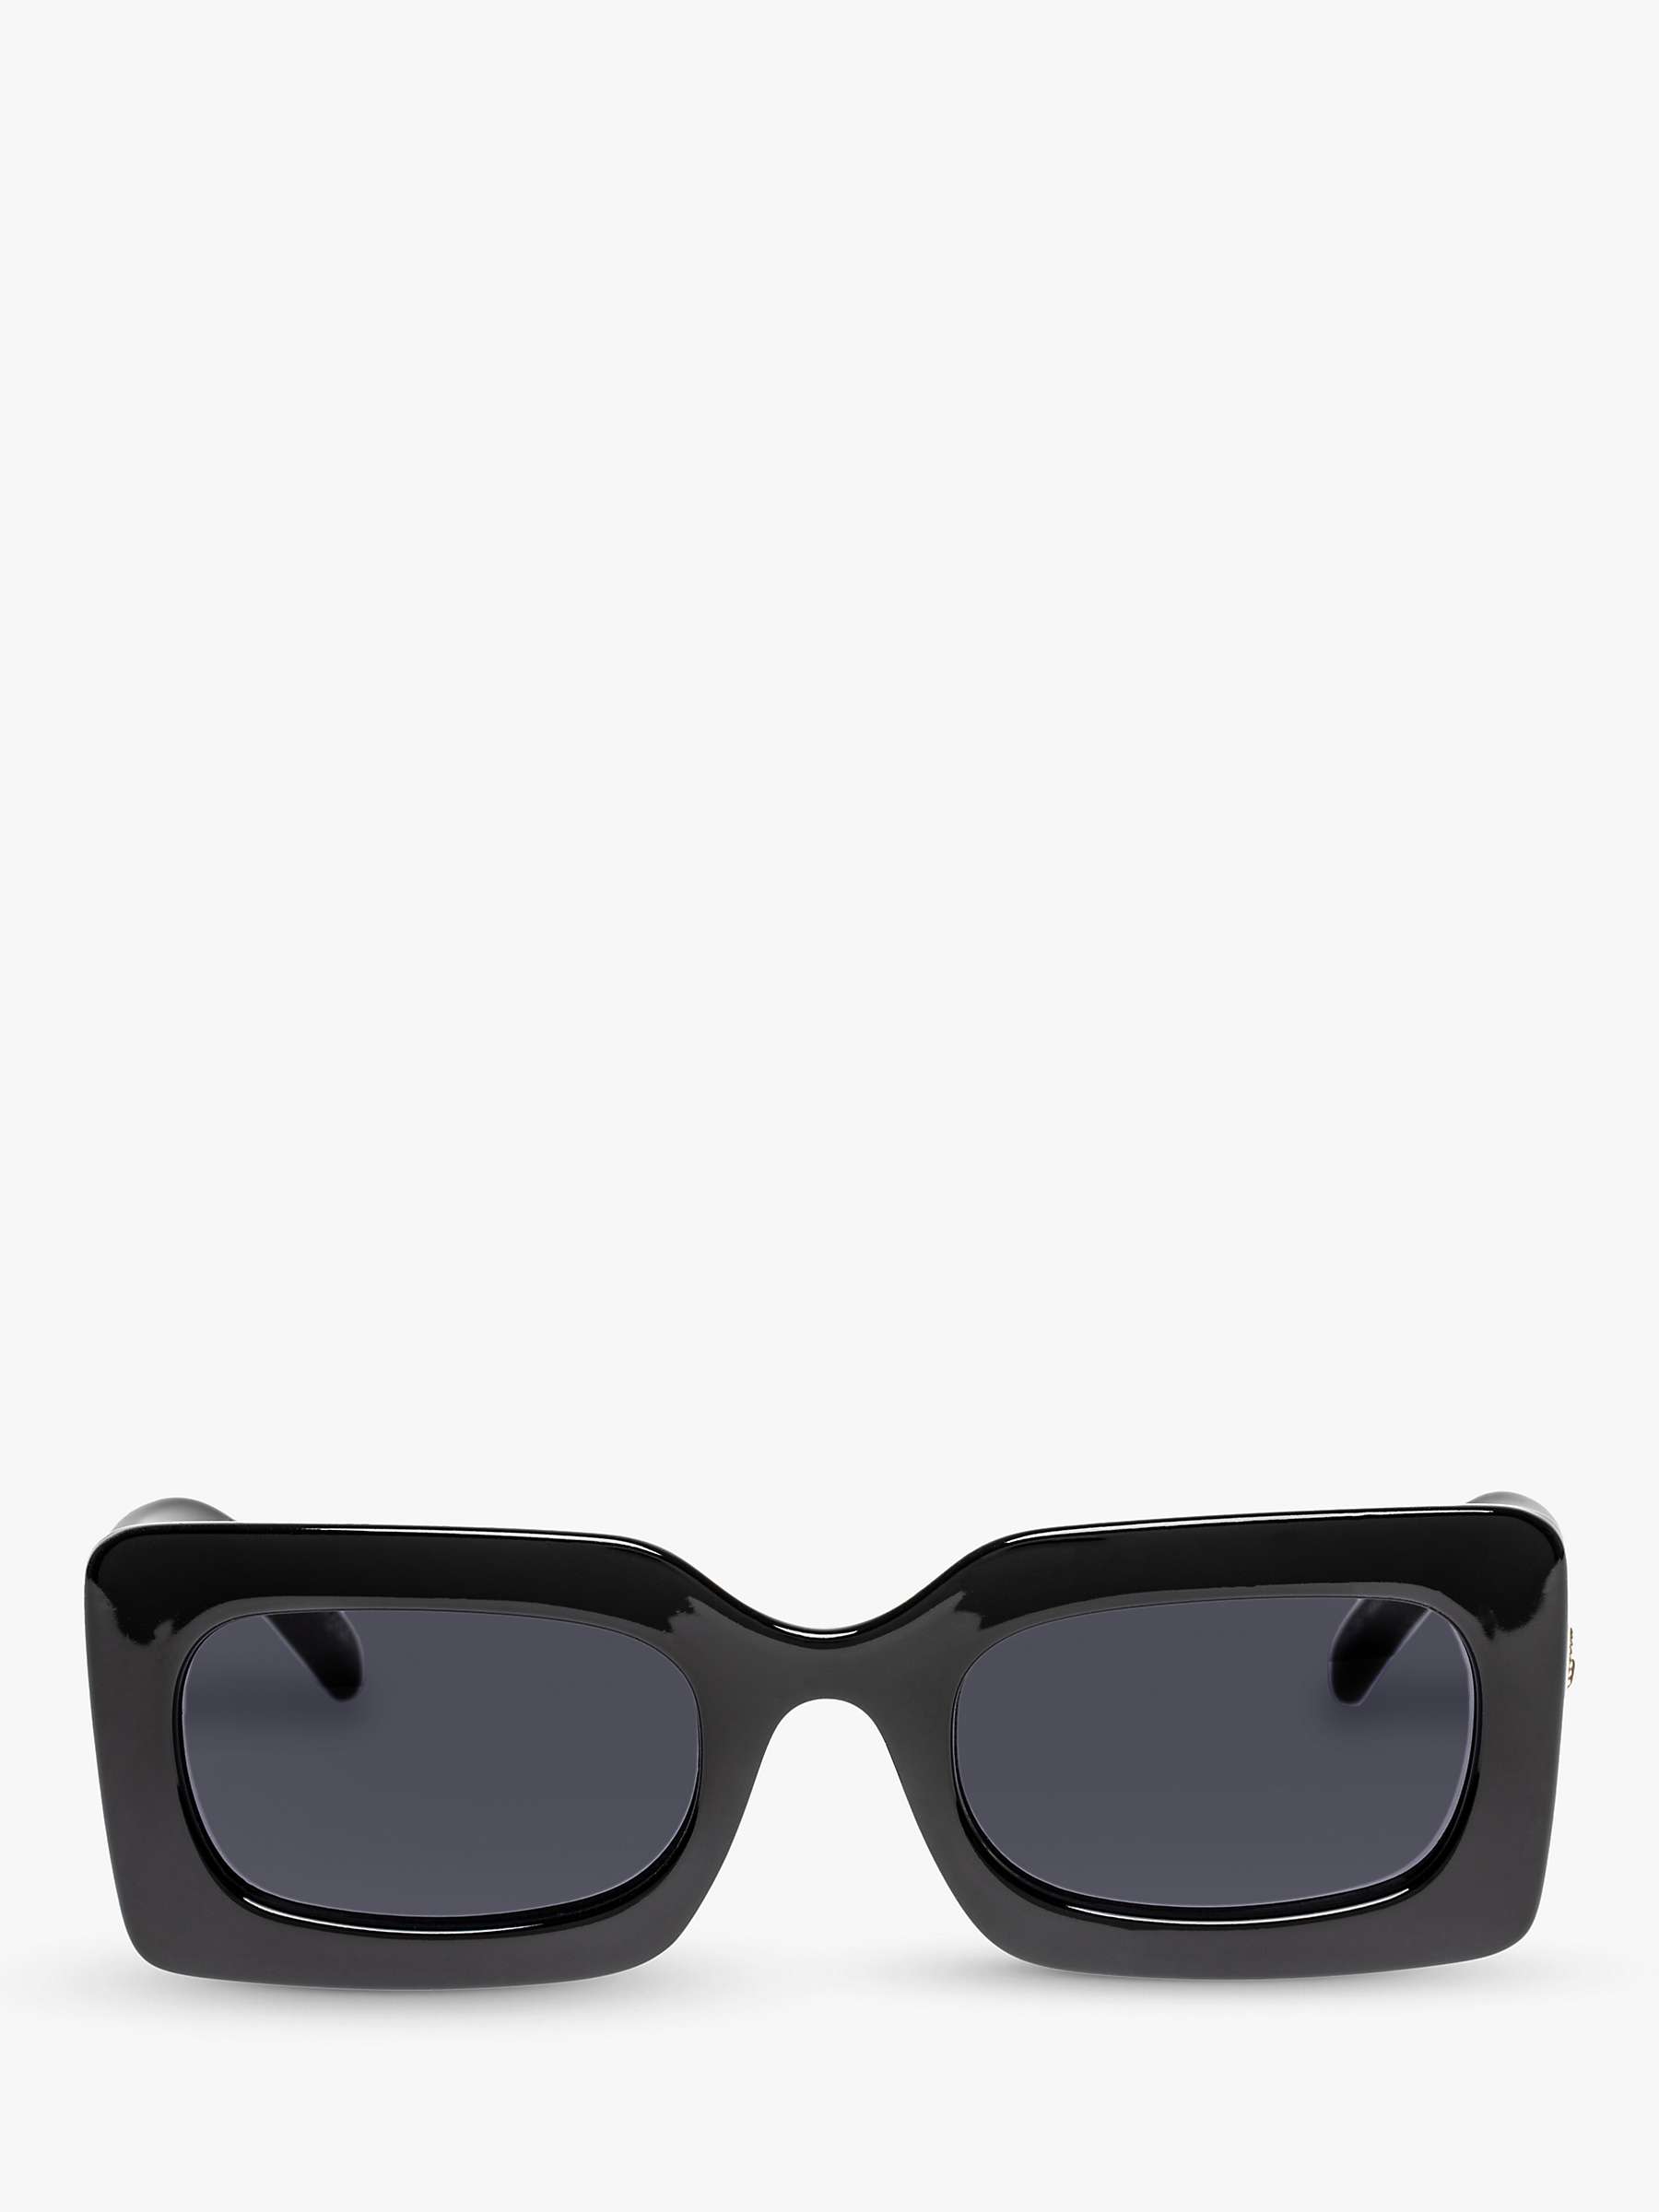 Buy Le Specs L5000175 Unisex Oh Damn Rectangular Sunglasses, Black/Grey Online at johnlewis.com